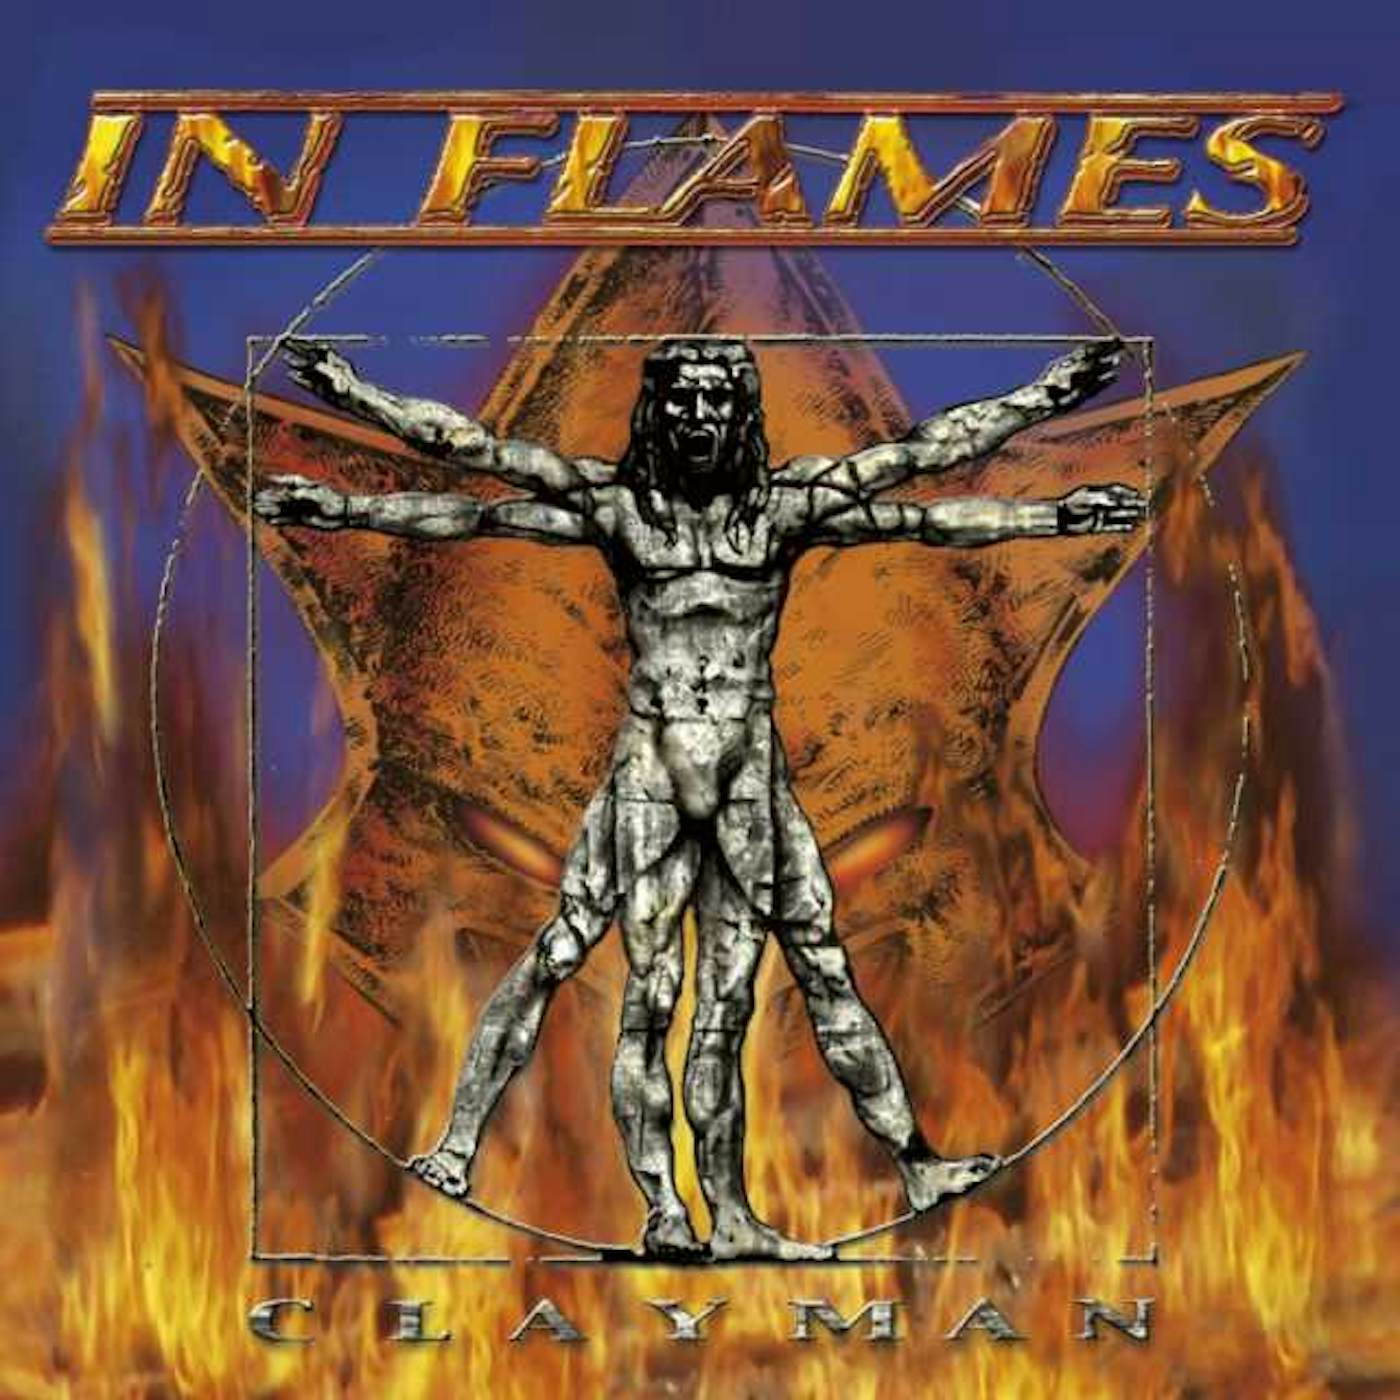 In Flames CLAYMAN CD